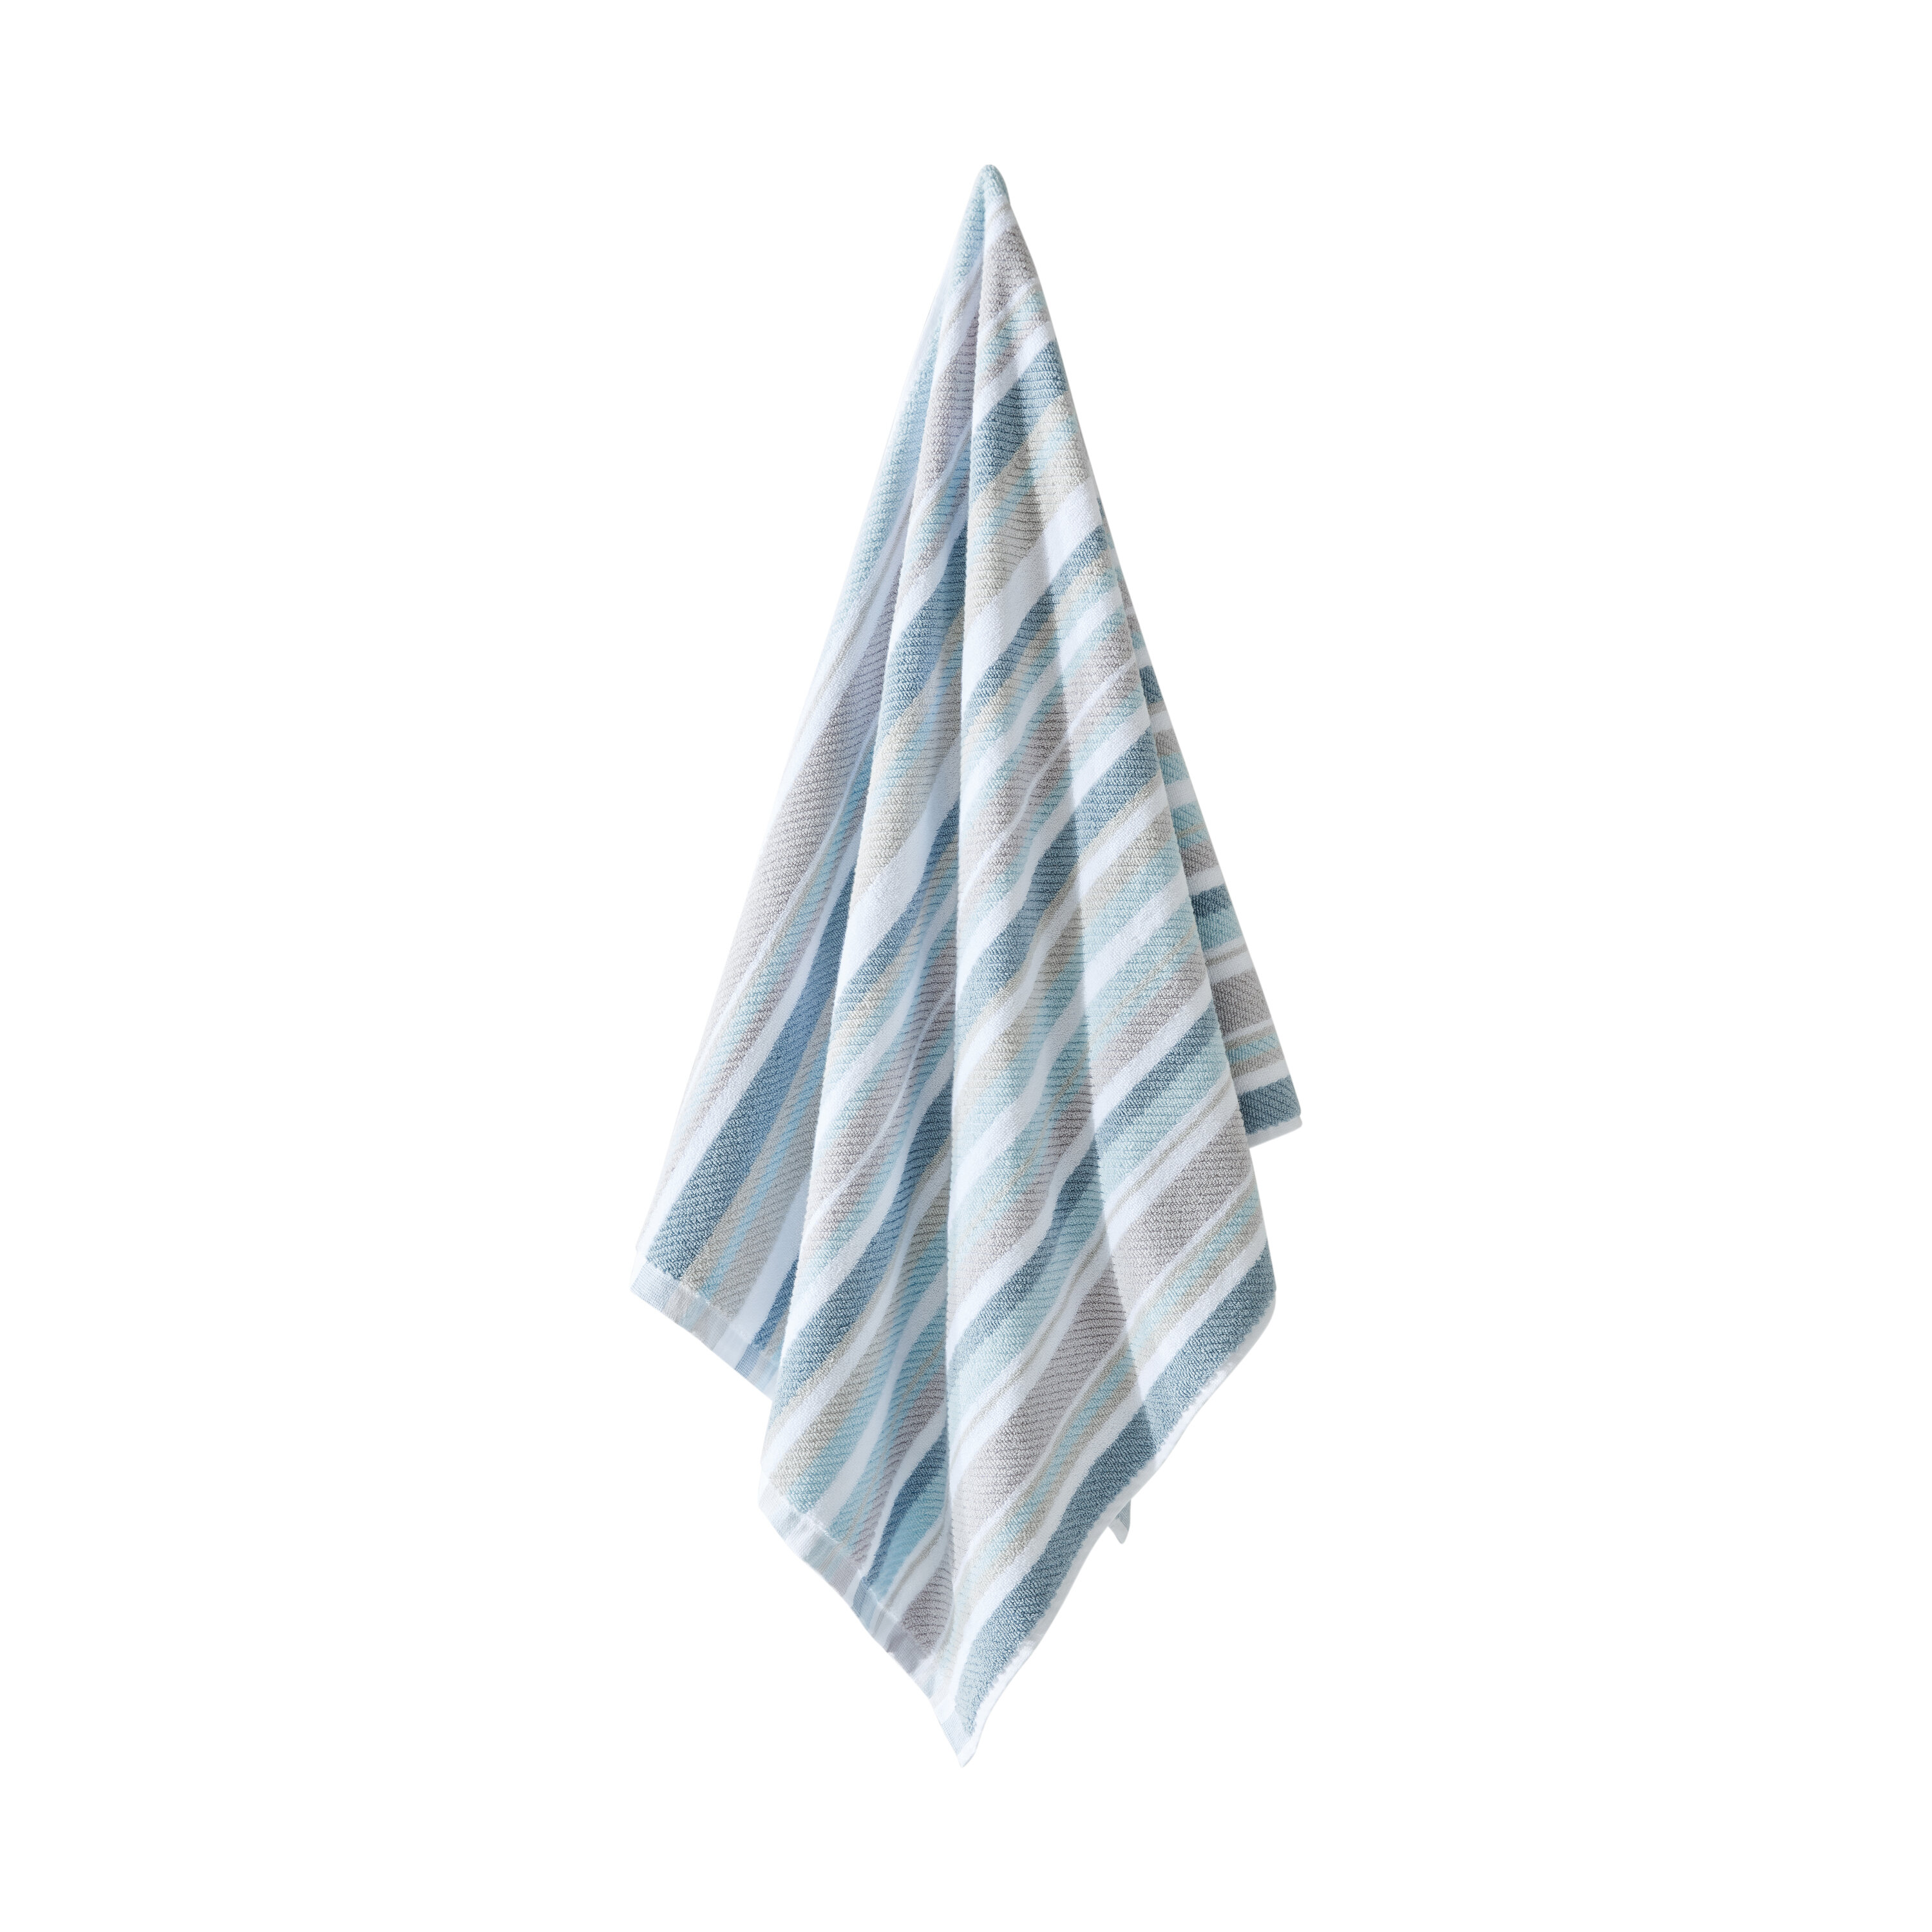 3pc Ocean Bay Striped Bath Towel Set Blue - Tommy Bahama